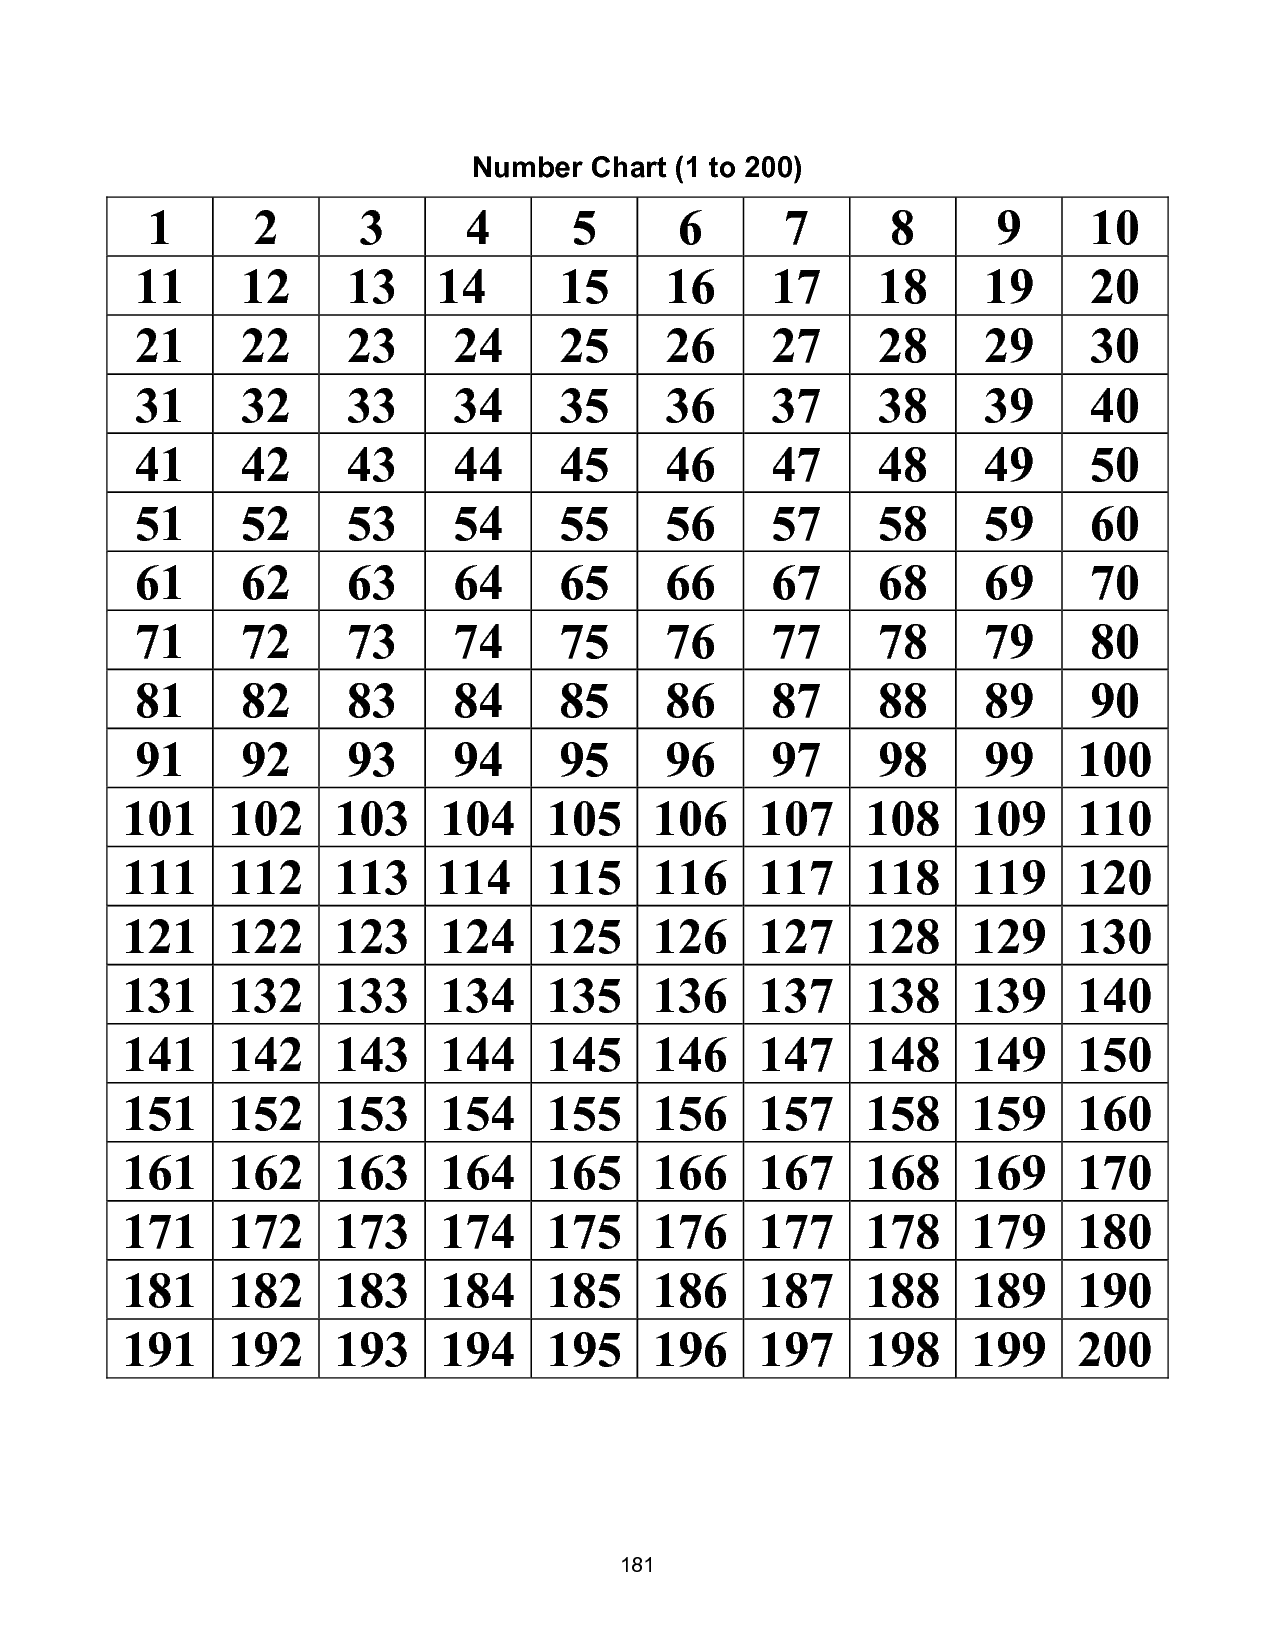 7-best-images-of-printable-number-grid-1-200-printable-number-chart-1